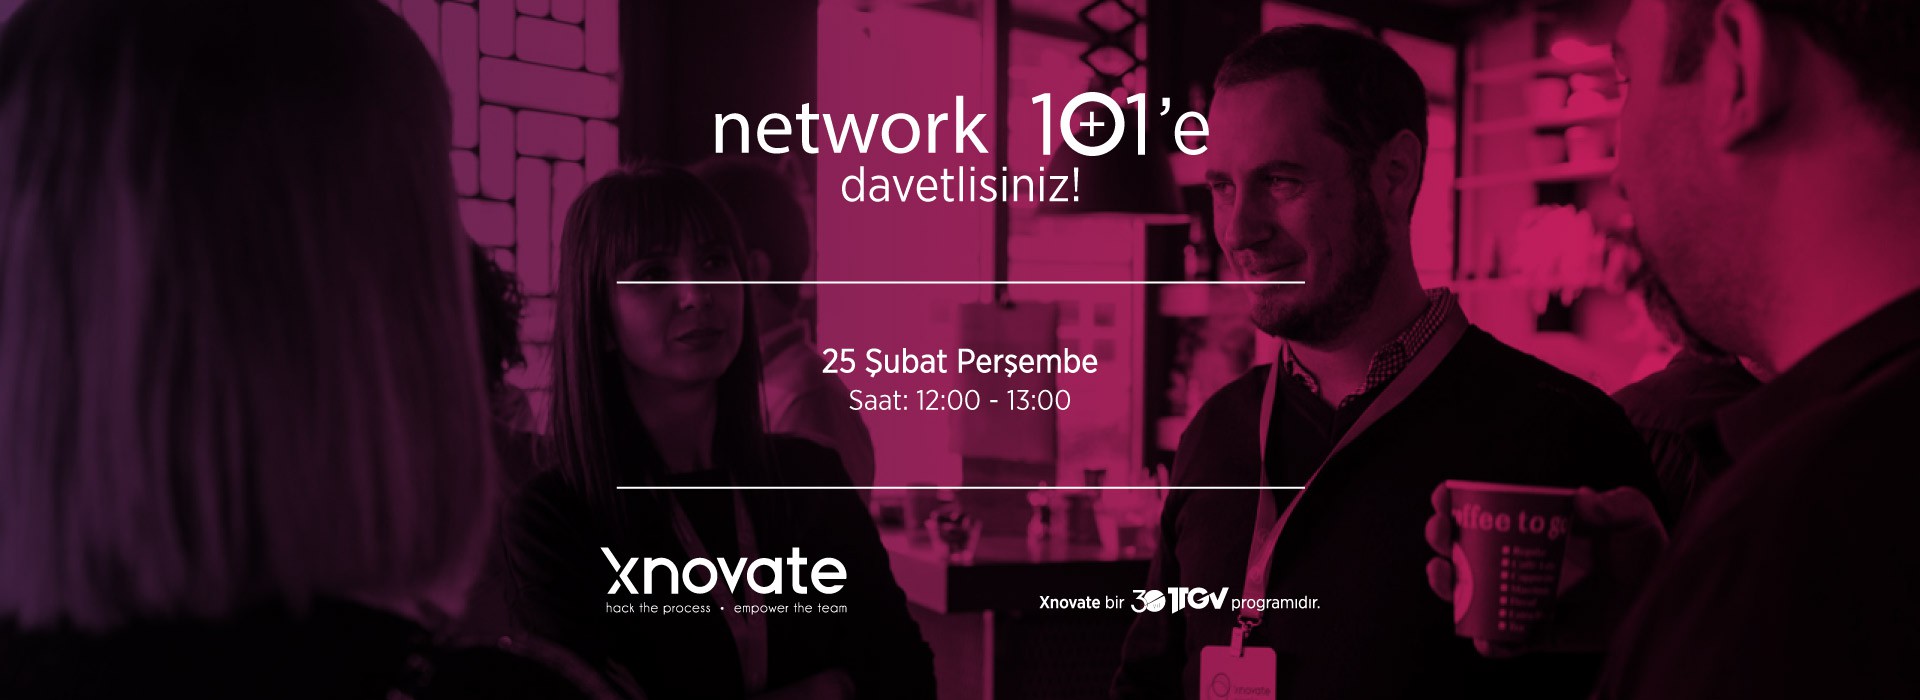 Network 101